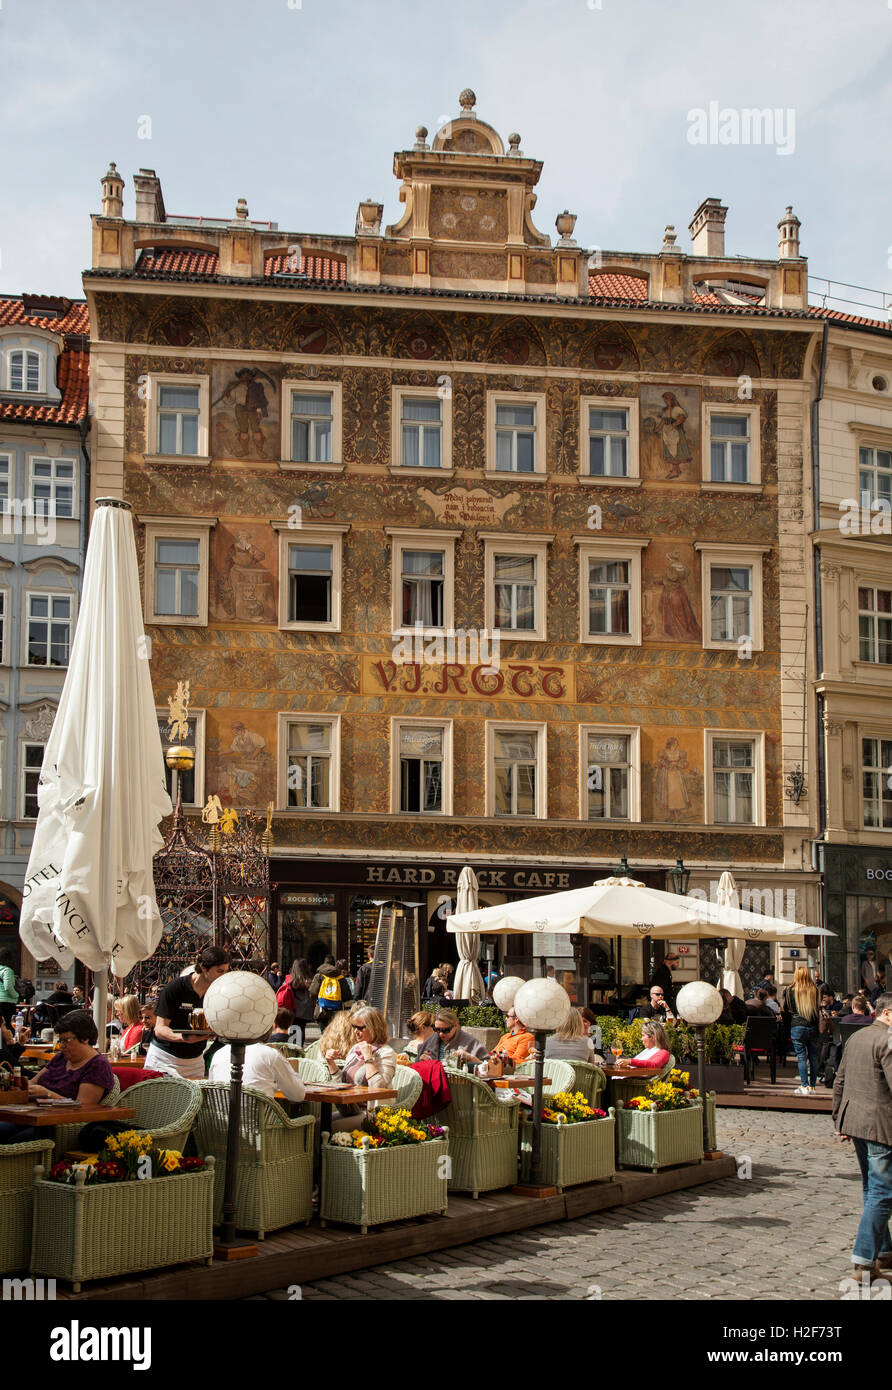 Hard Rock Cafe U Rotta coffee house in Small Square, Prague. Stock Photo